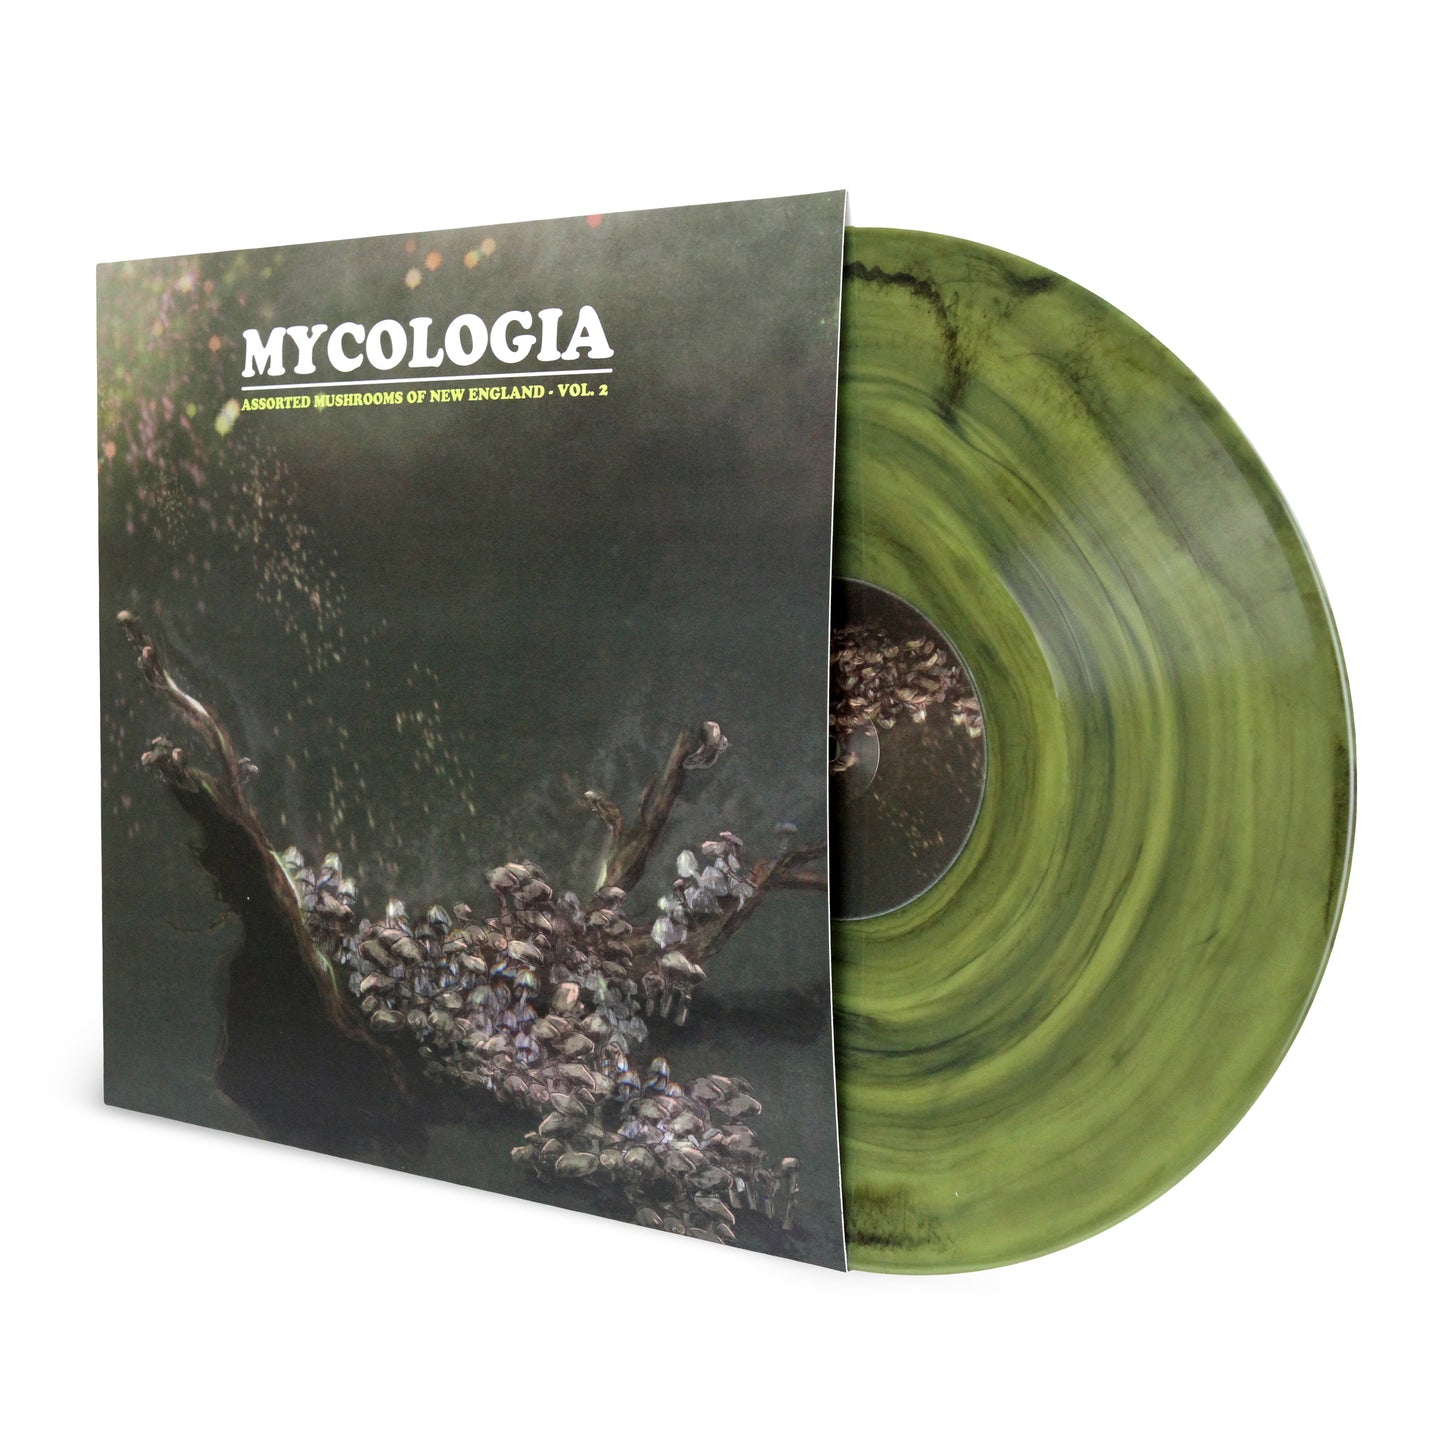 MYCOLOGIA "Assorted Mushrooms of New England Vol.2" vinyl LP